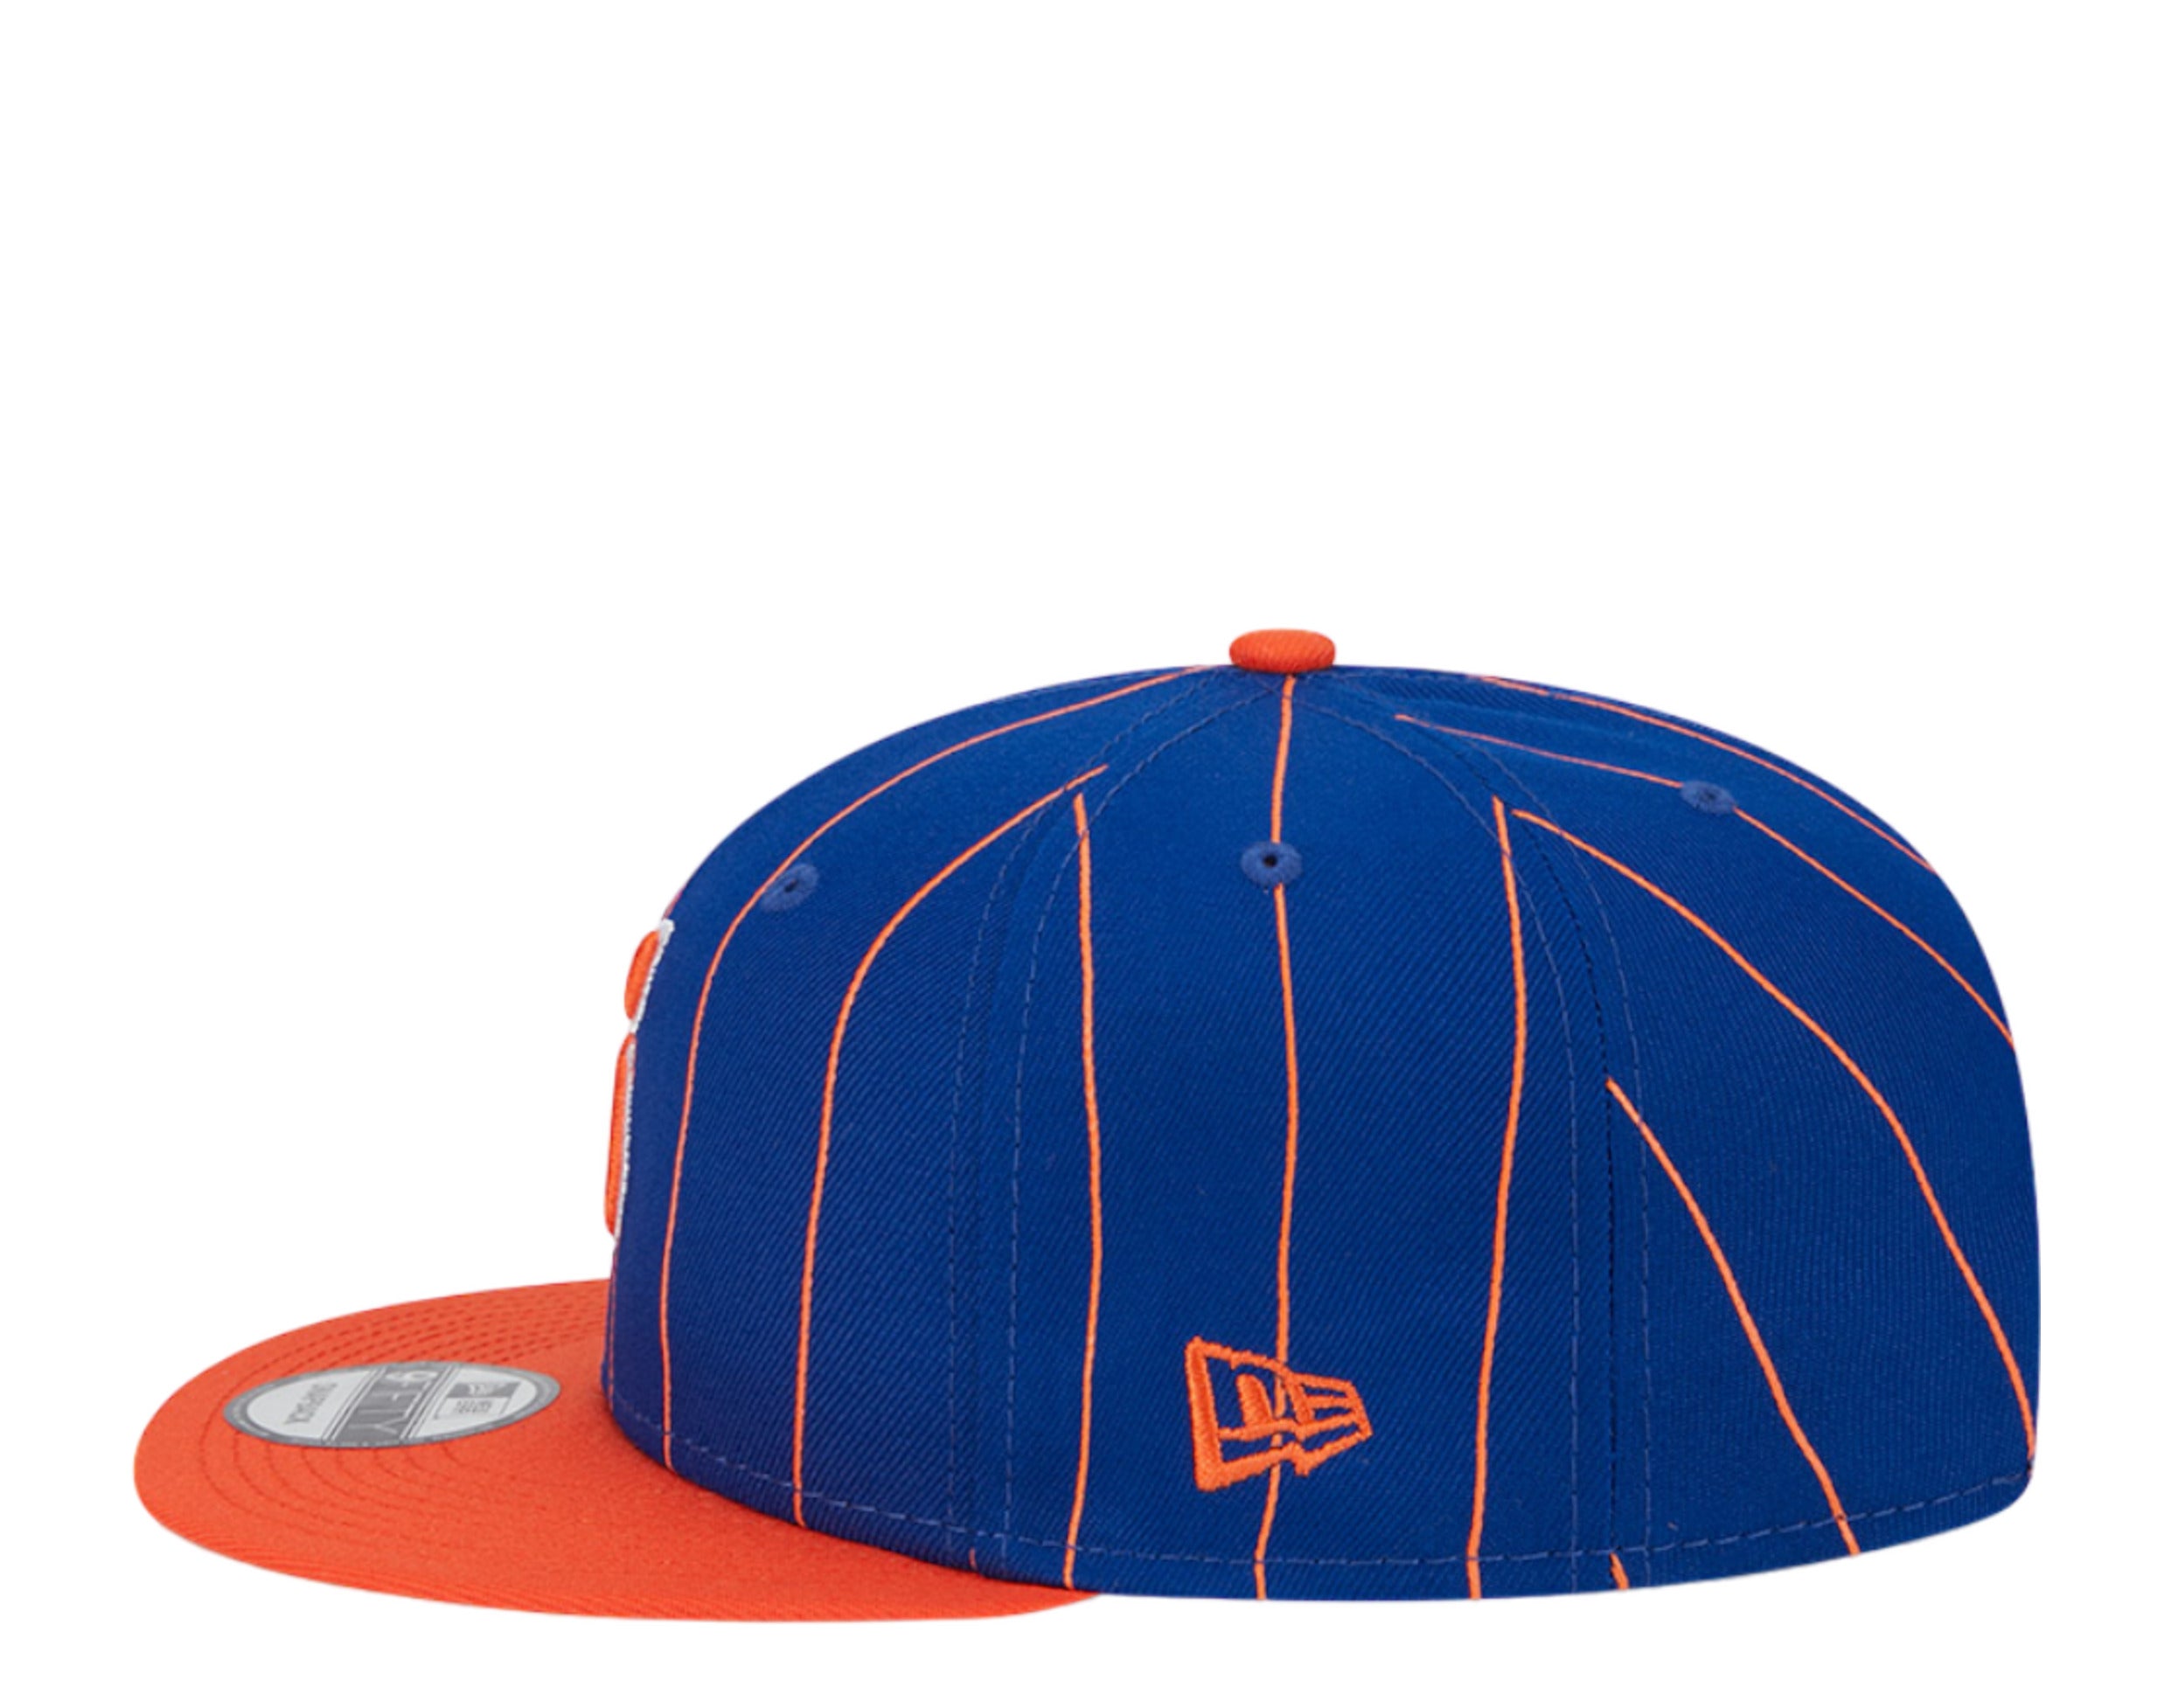 New Era Snapback New York Yankees/Mets Hat Black/blue/orange